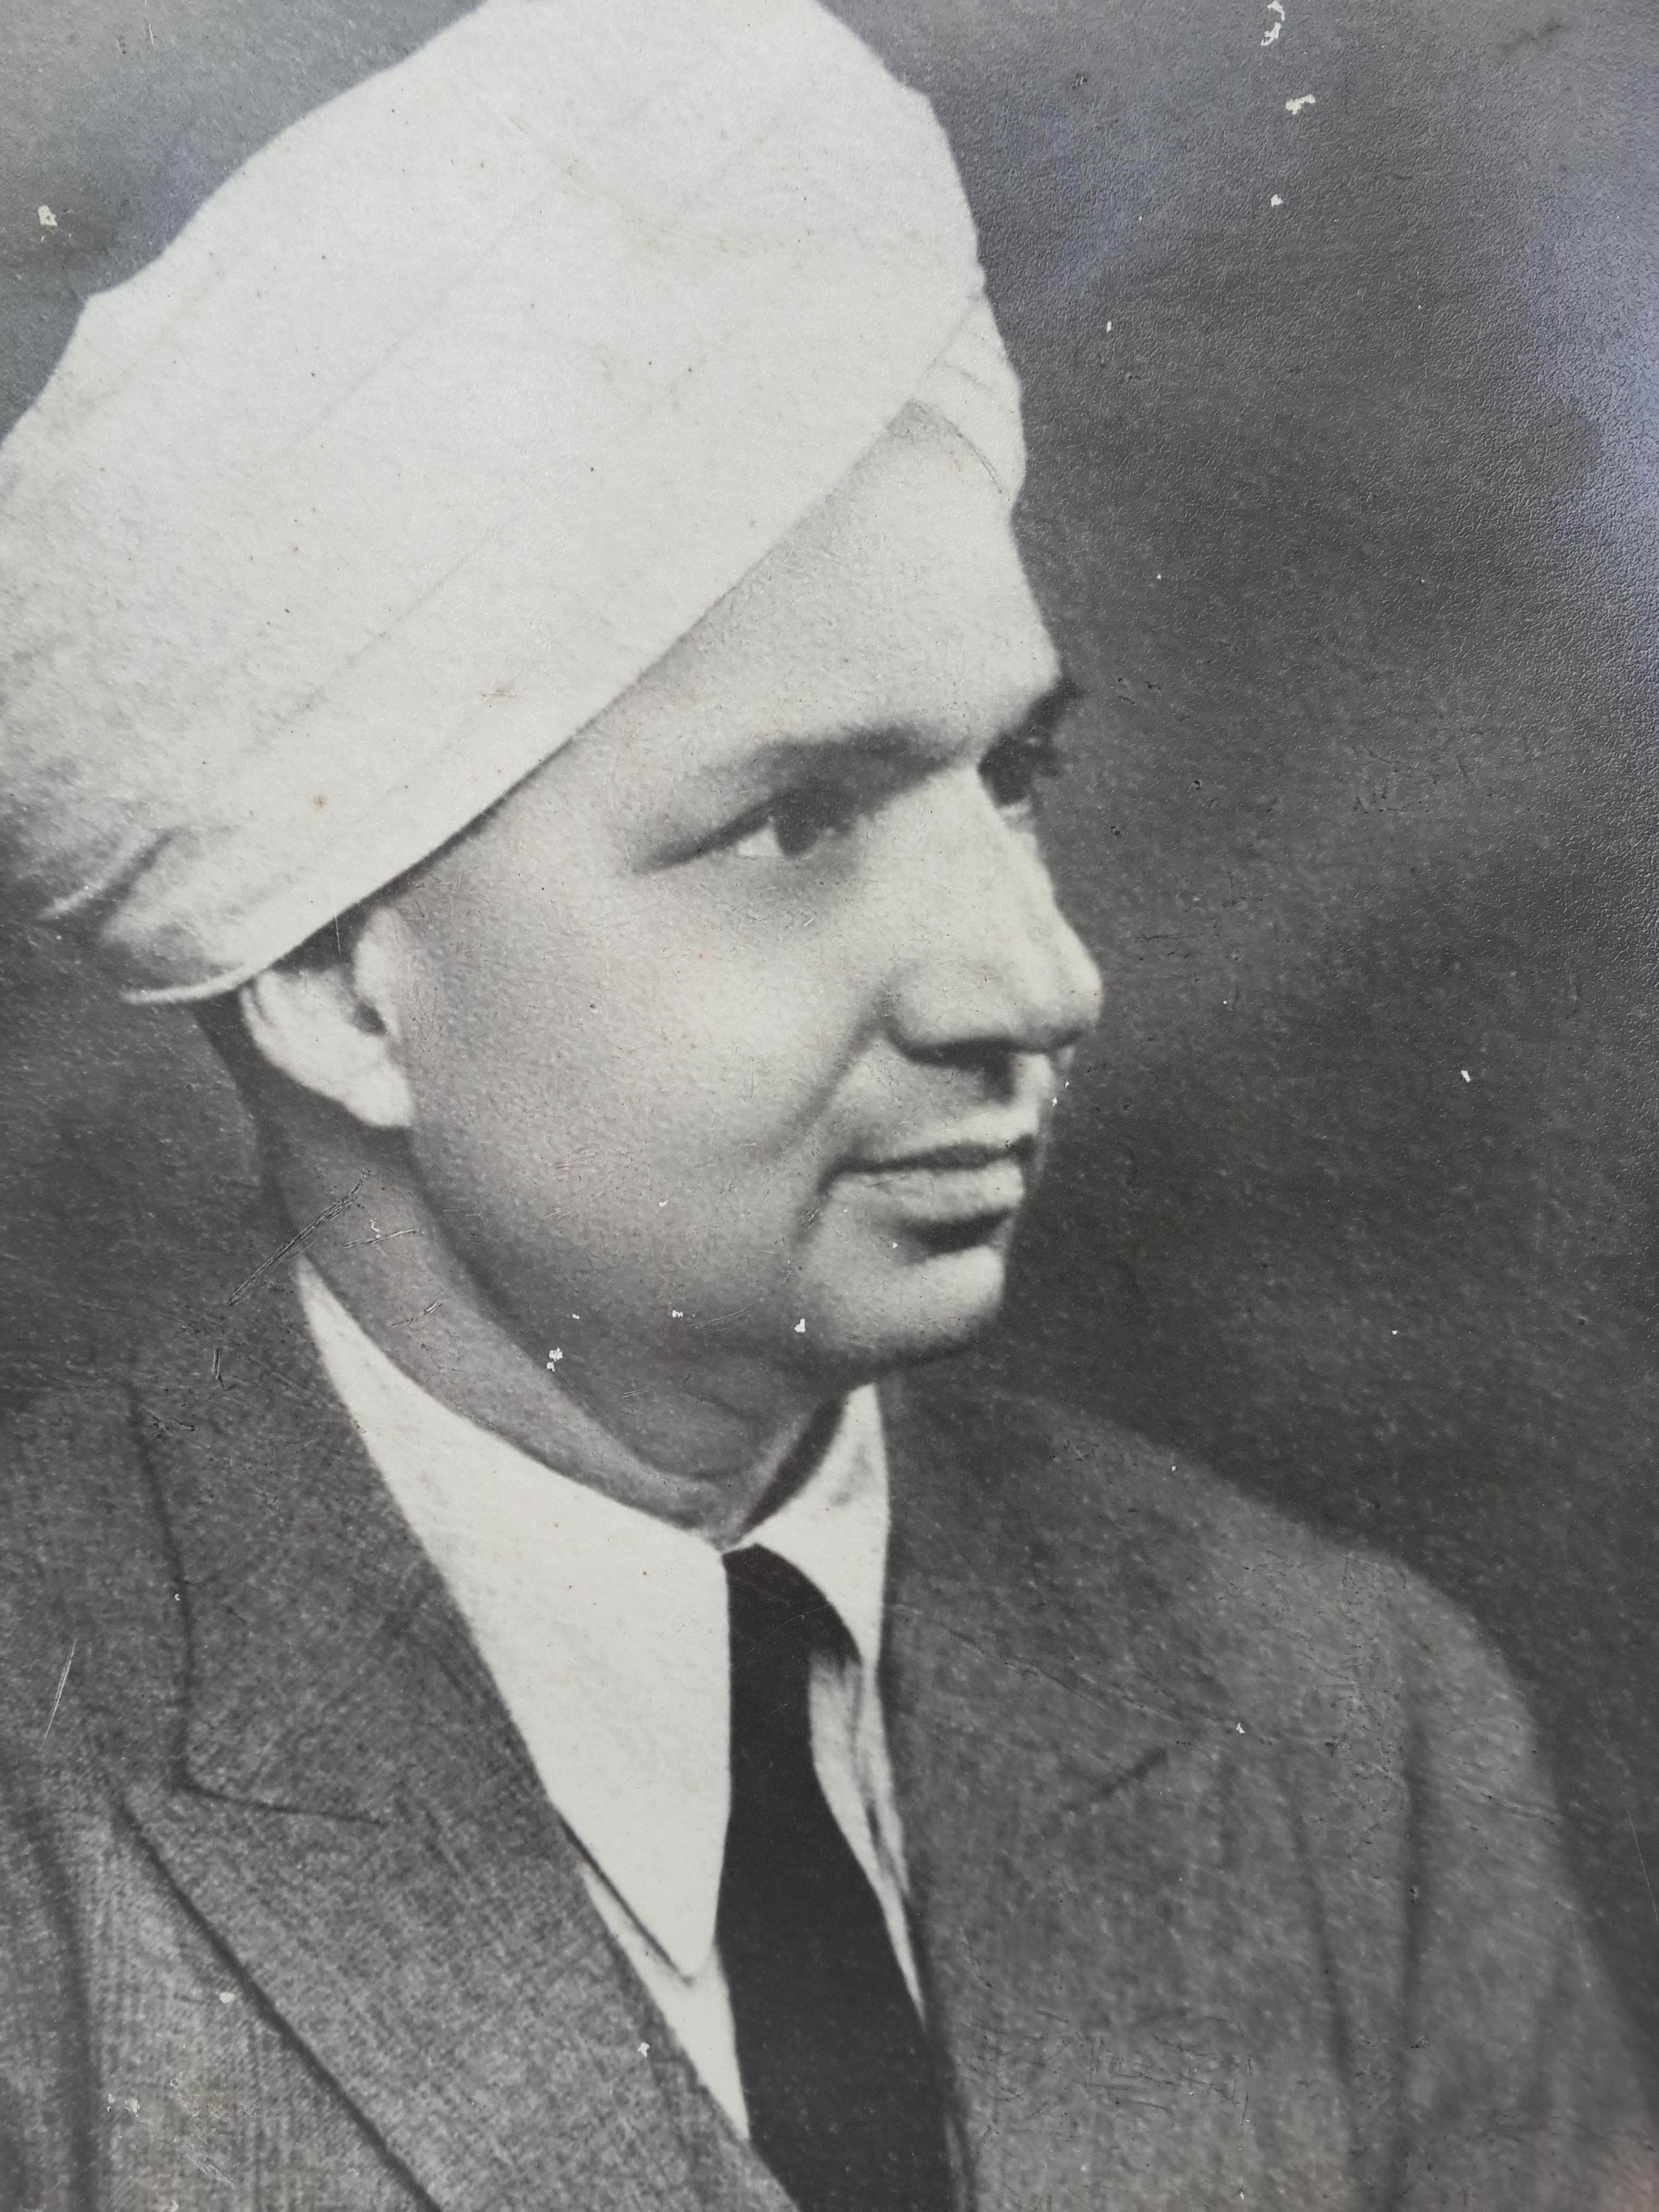 Bela Kapoor's maternal grandfather, Sri Ram Puri